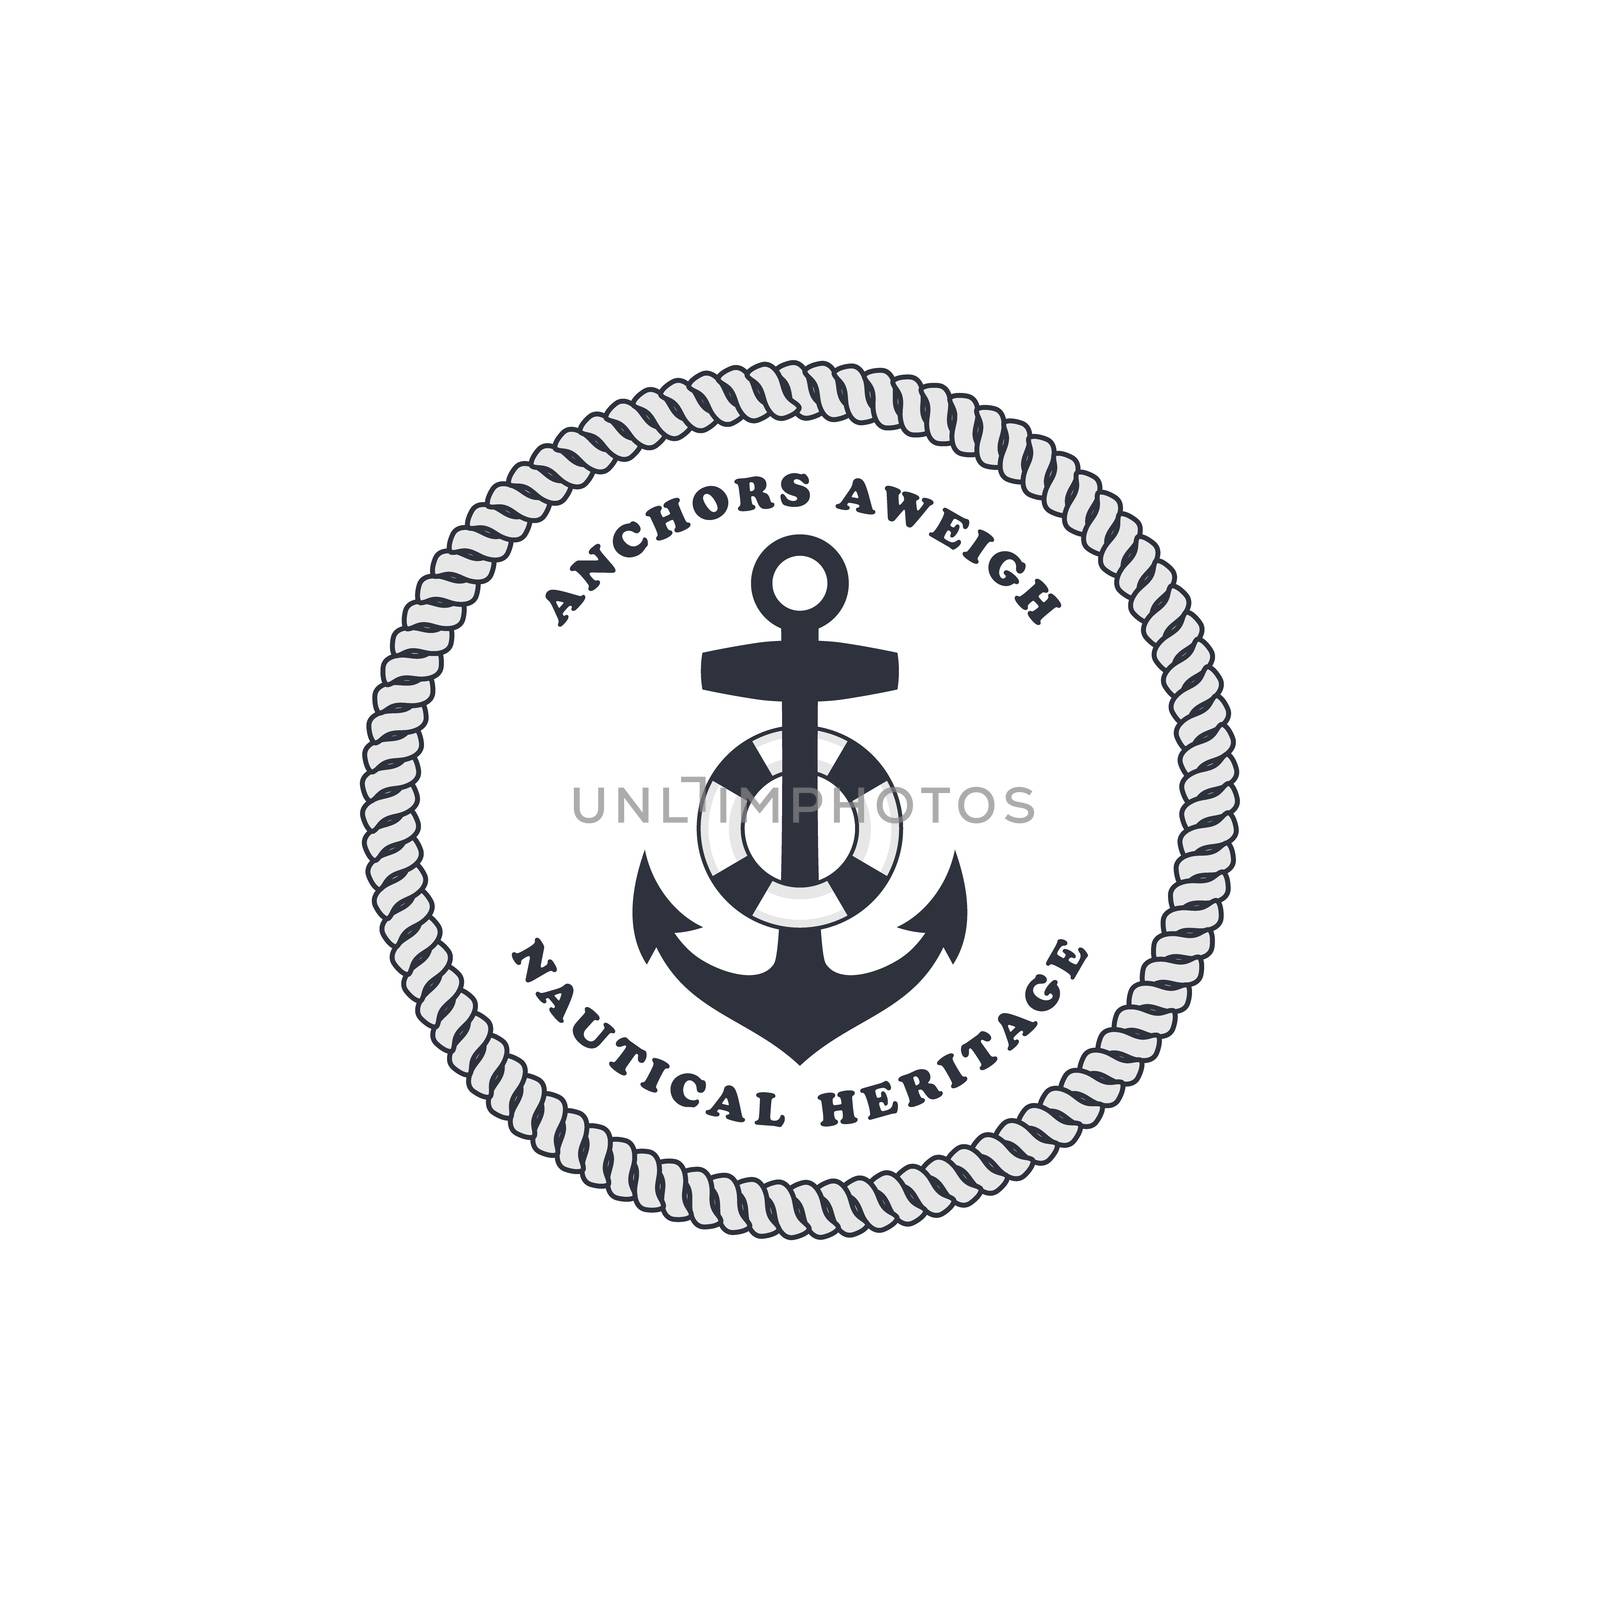 sailor anchor ocean nautical theme vector art illustration